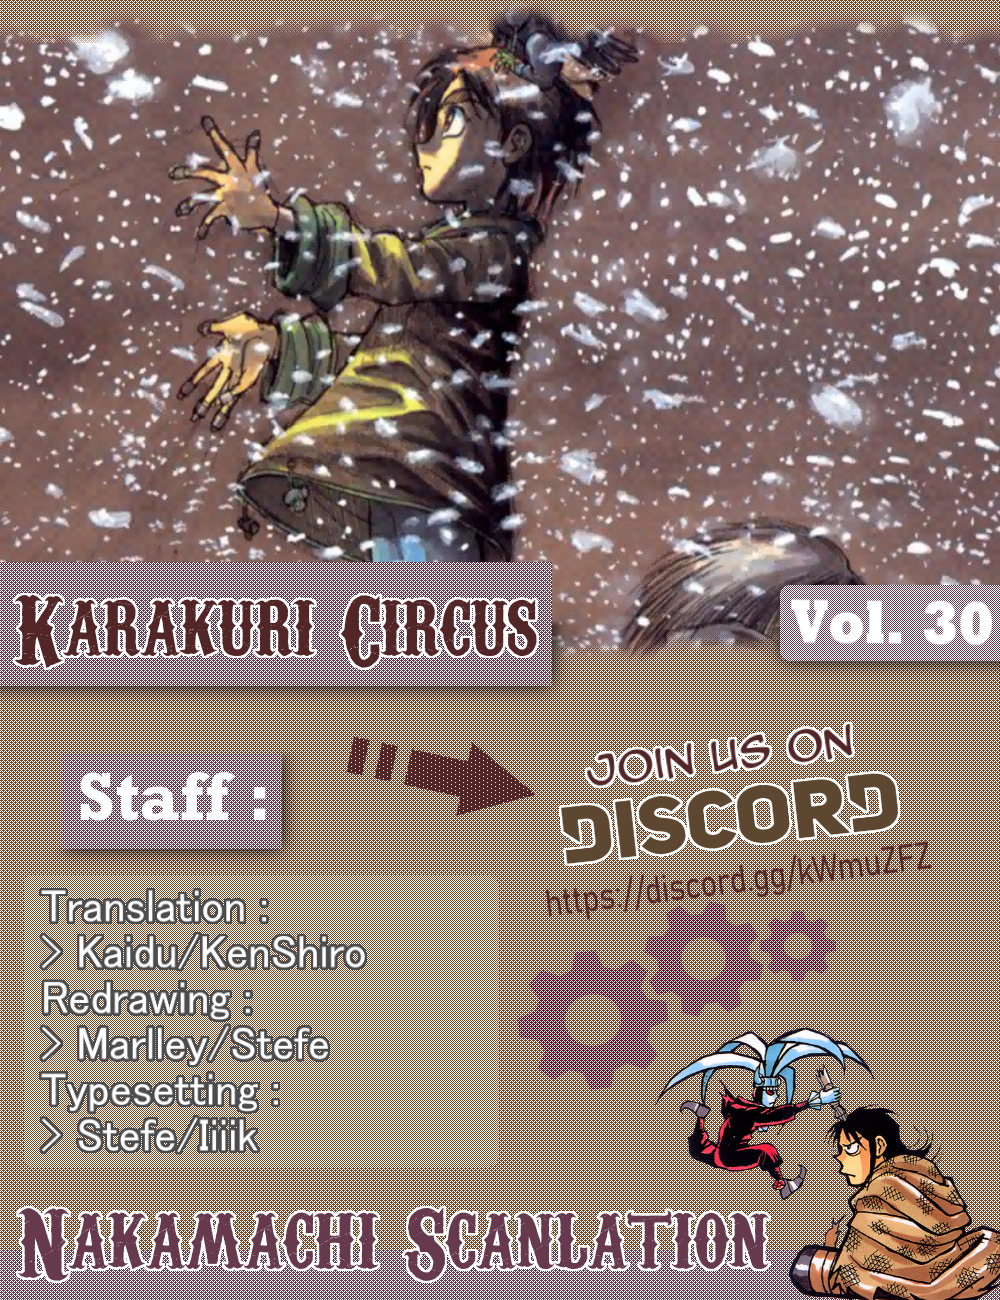 Karakuri Circus Chapter 294: Main Part - Welcome To The Kuroga Village - Act 12: Assault Under The Snow - Picture 1